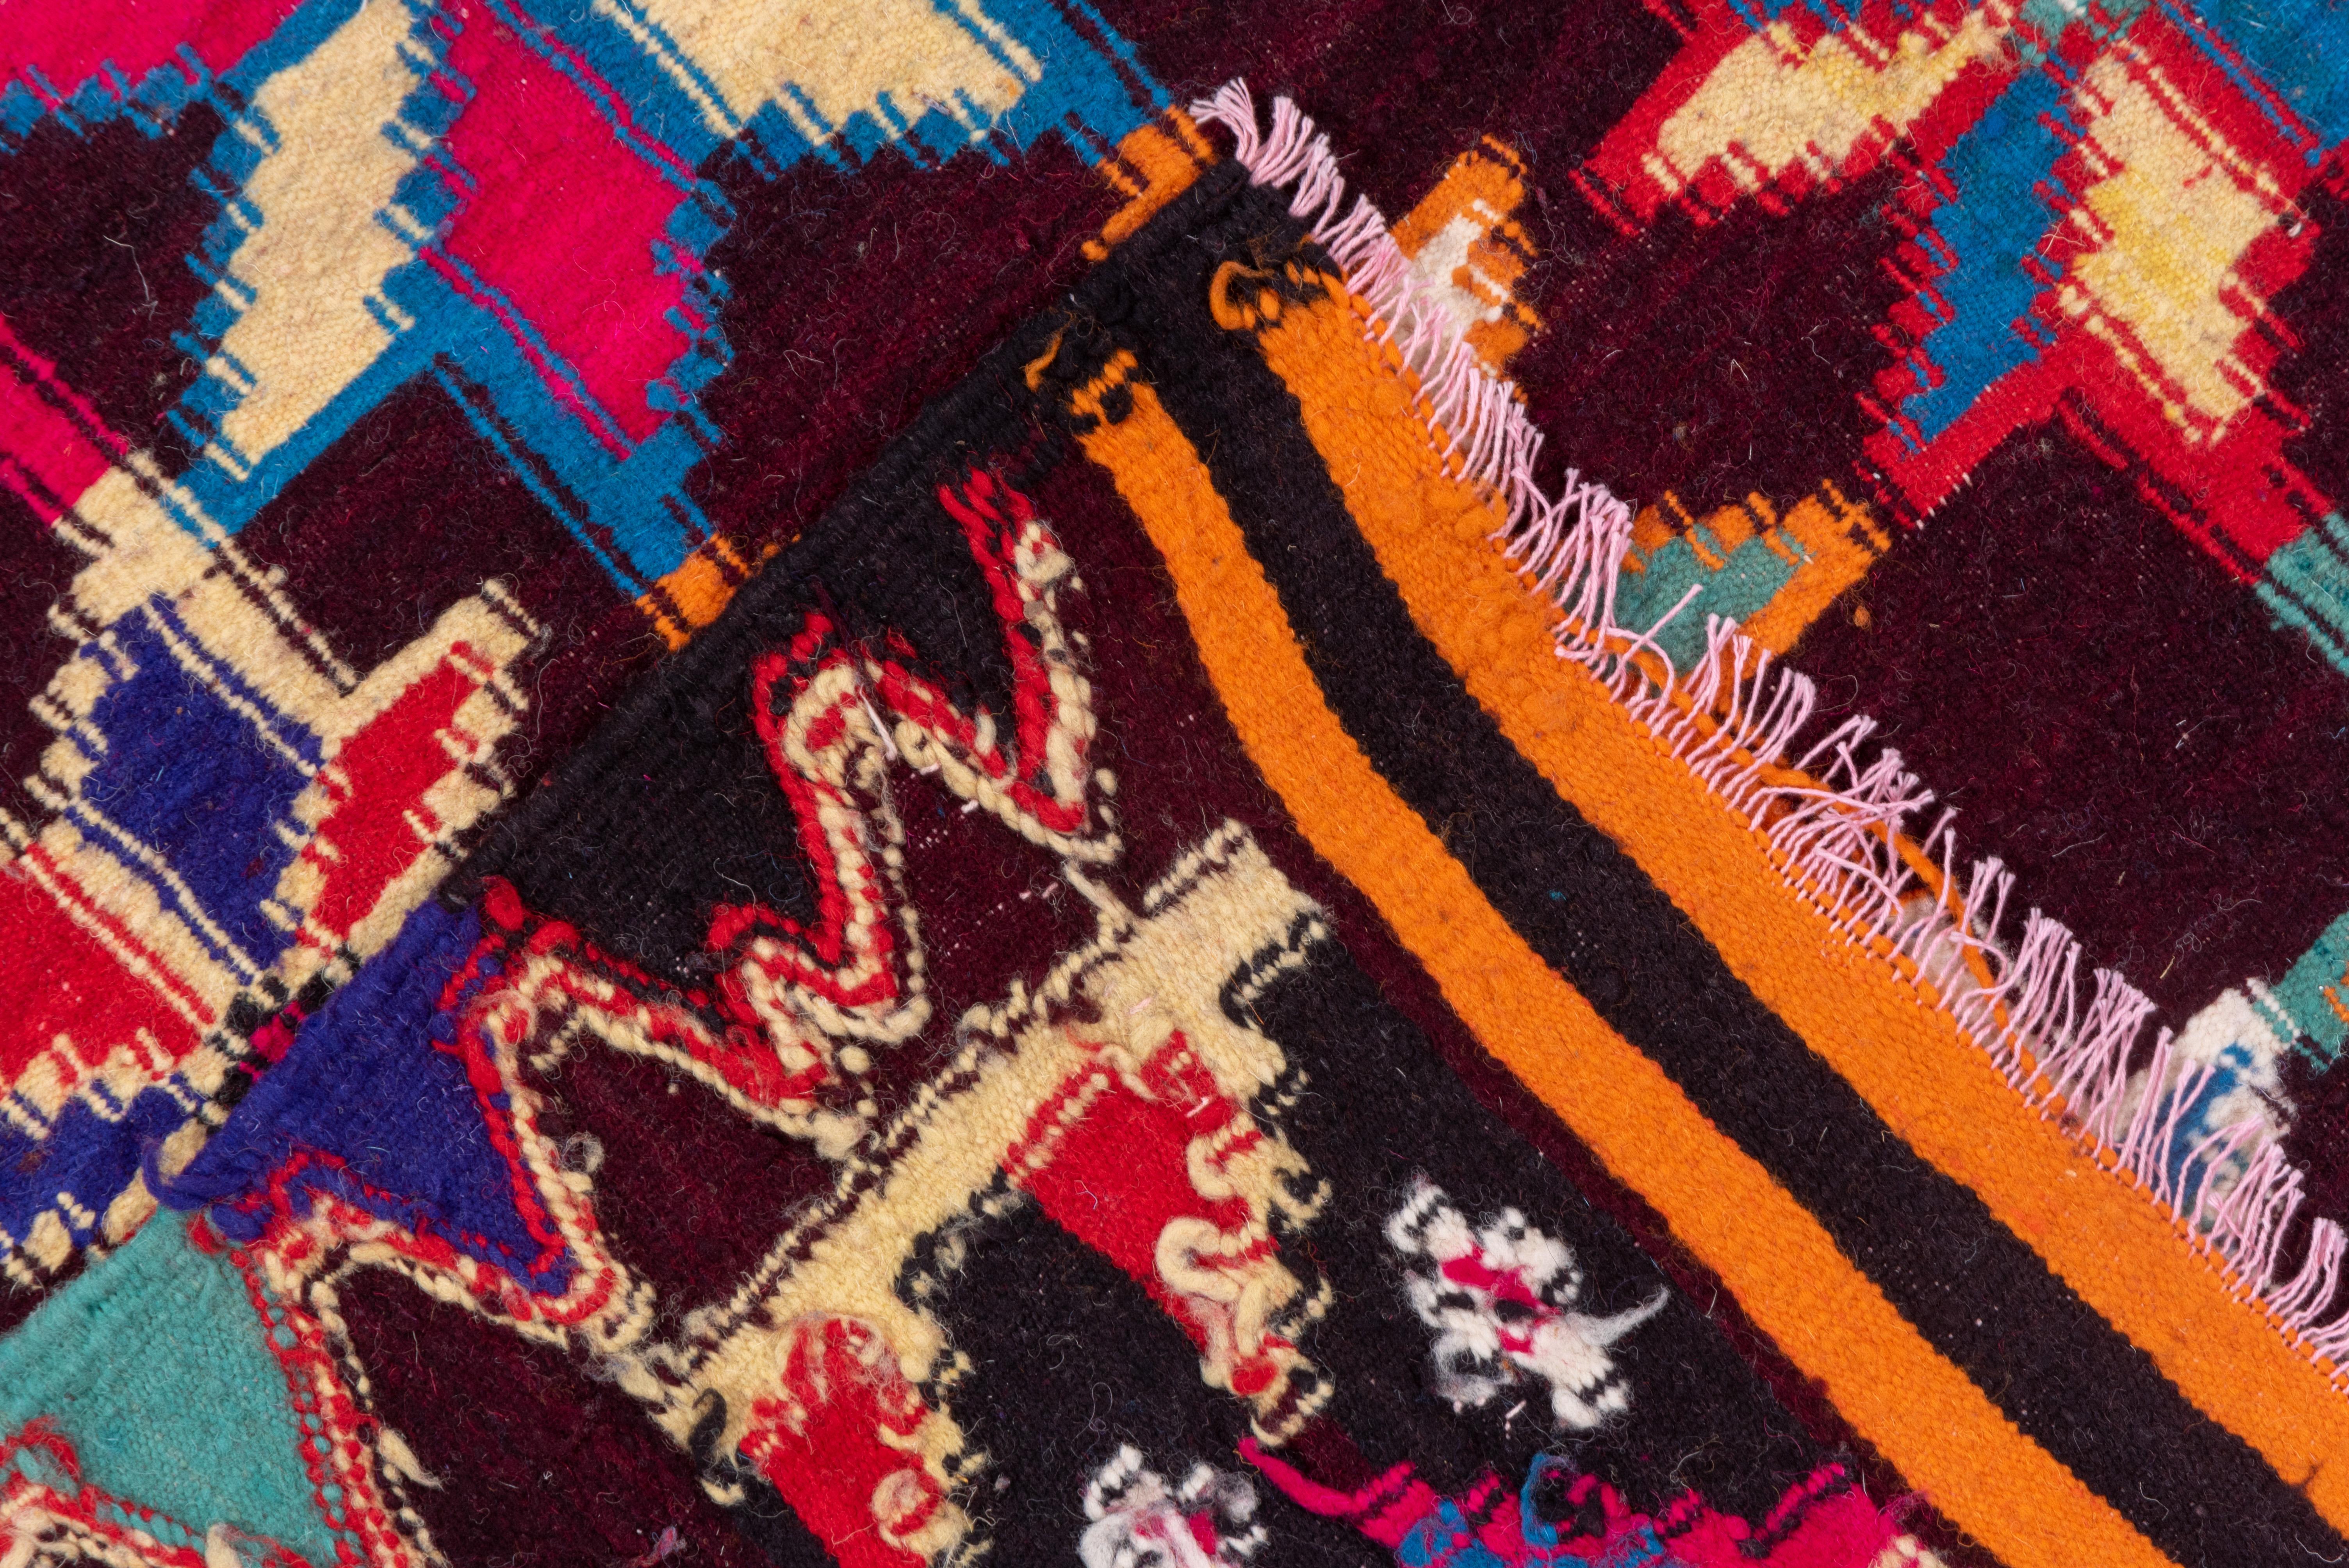 Hand-Woven Colorful Moroccan Kilim Carpet For Sale